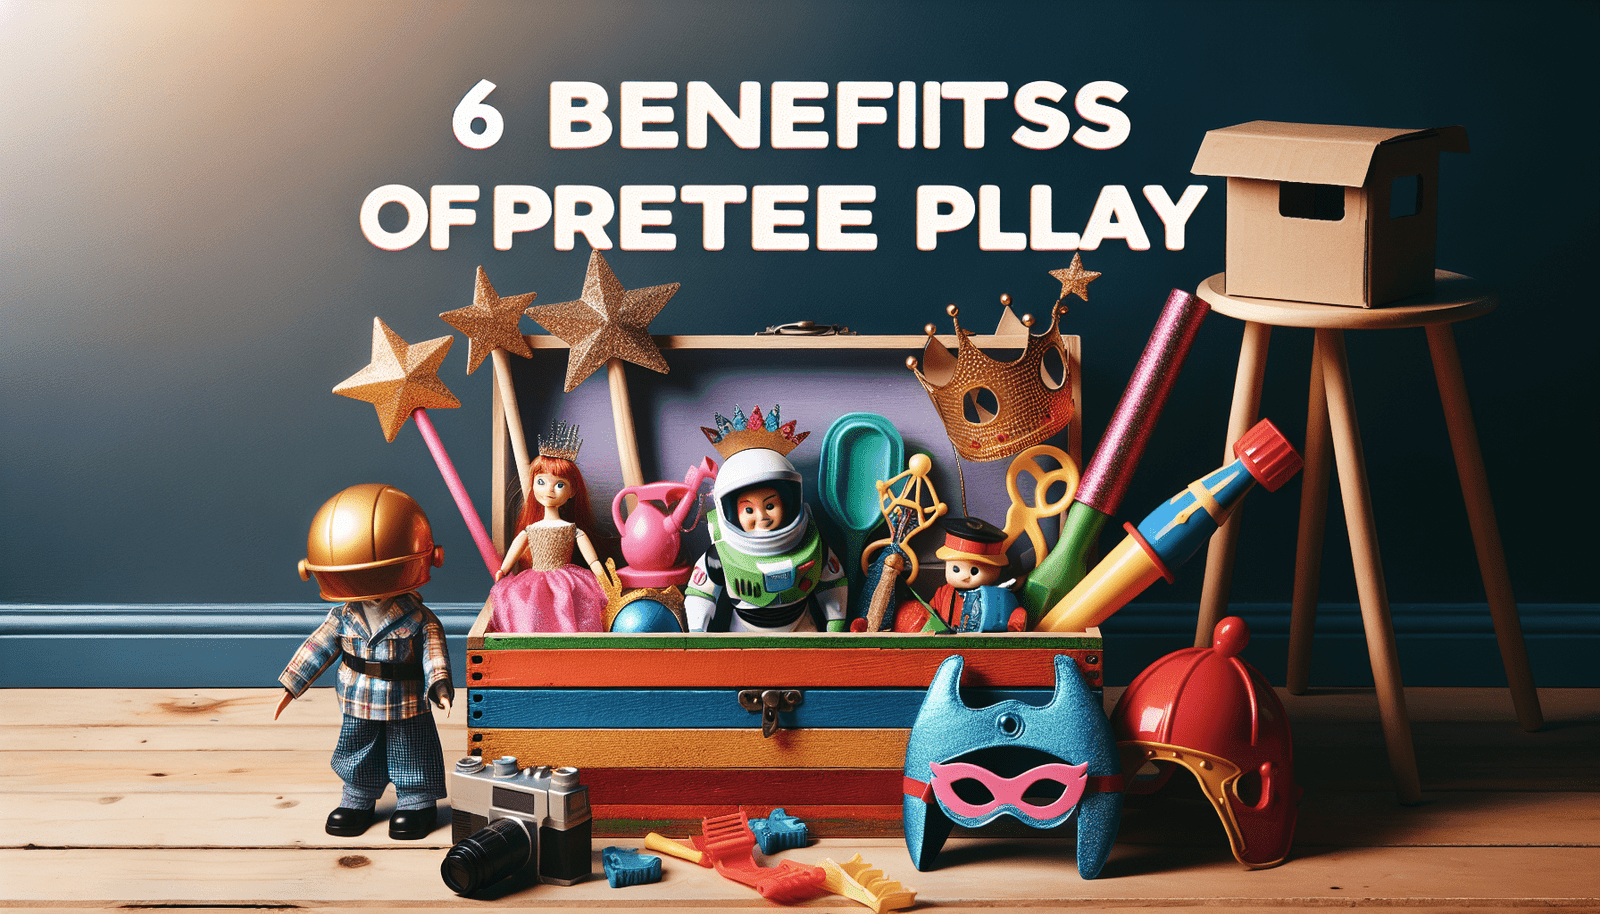 6 Benefits of Pretend Play